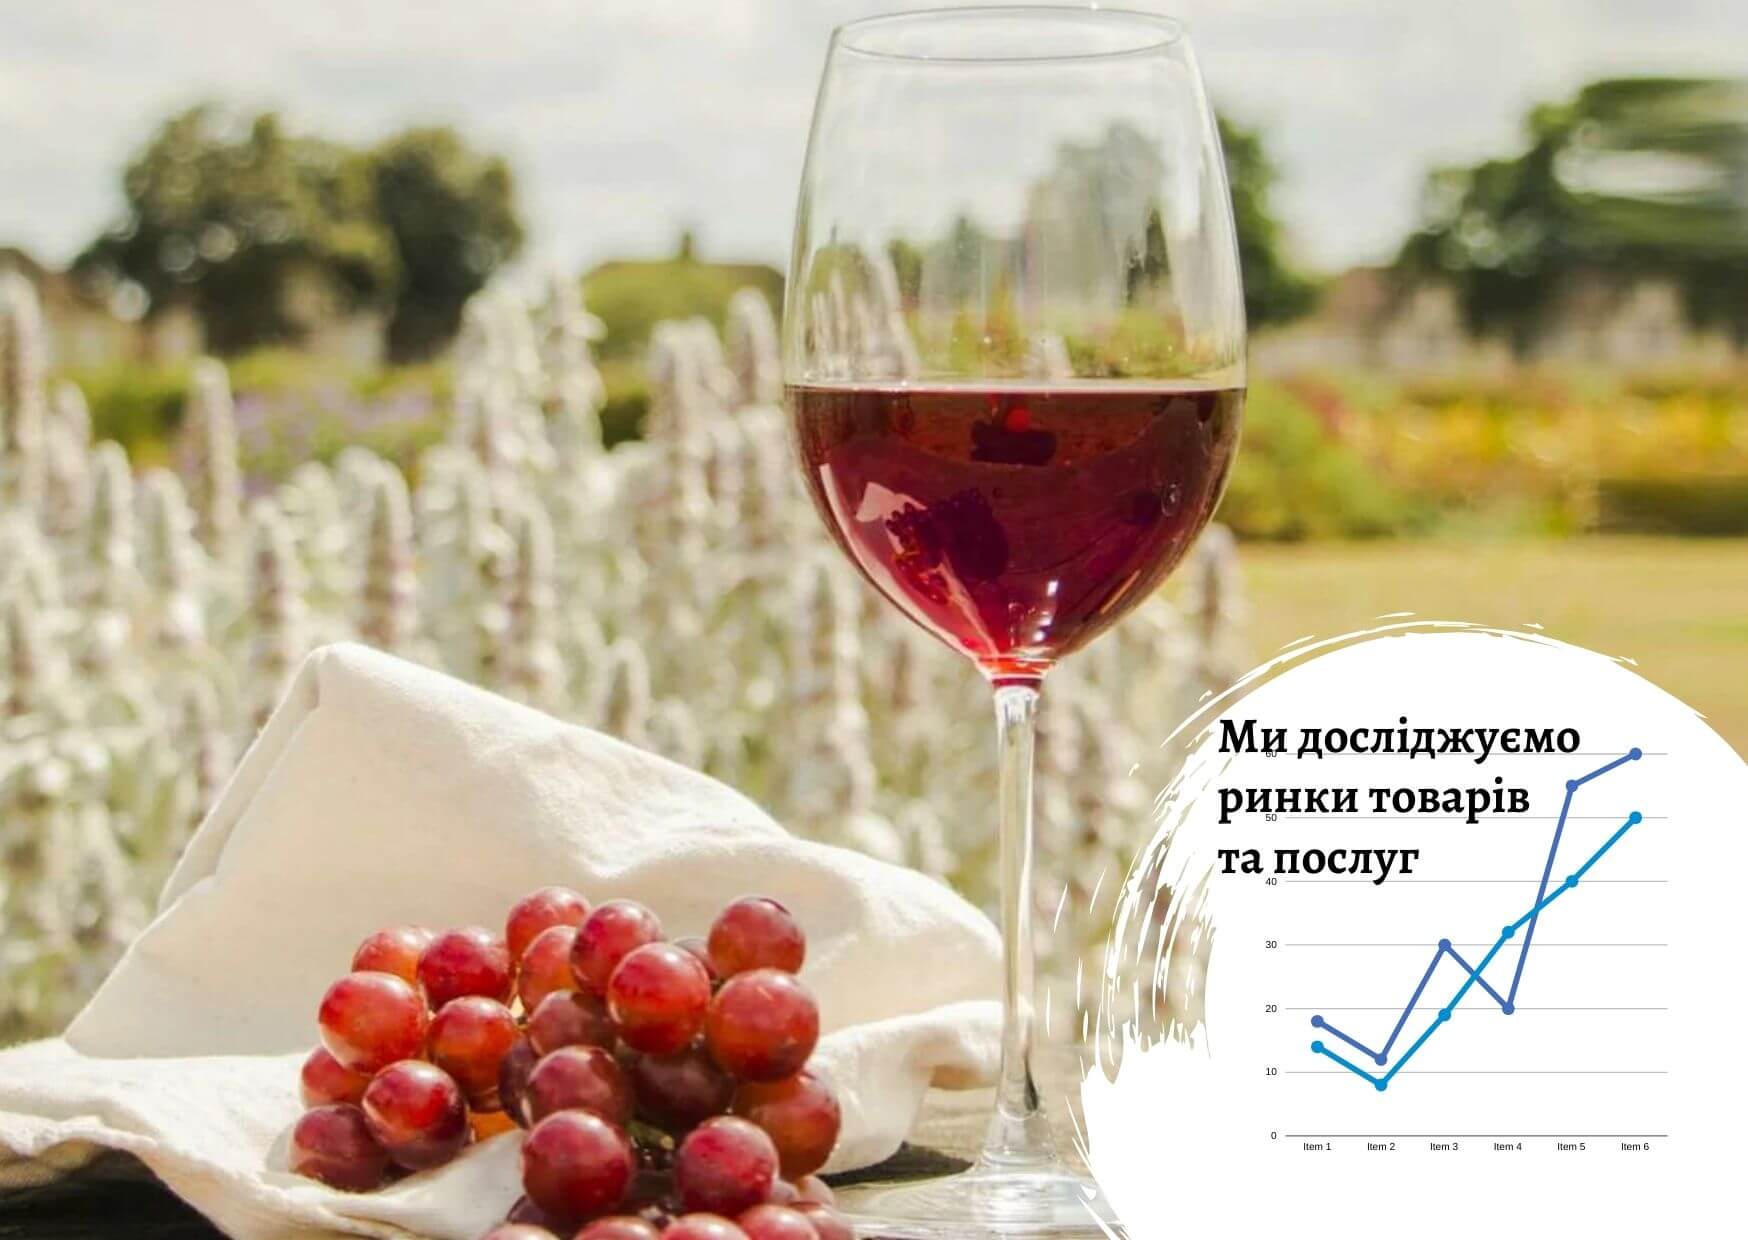 Wine market (imported) in Ukraine: competitive analysis 